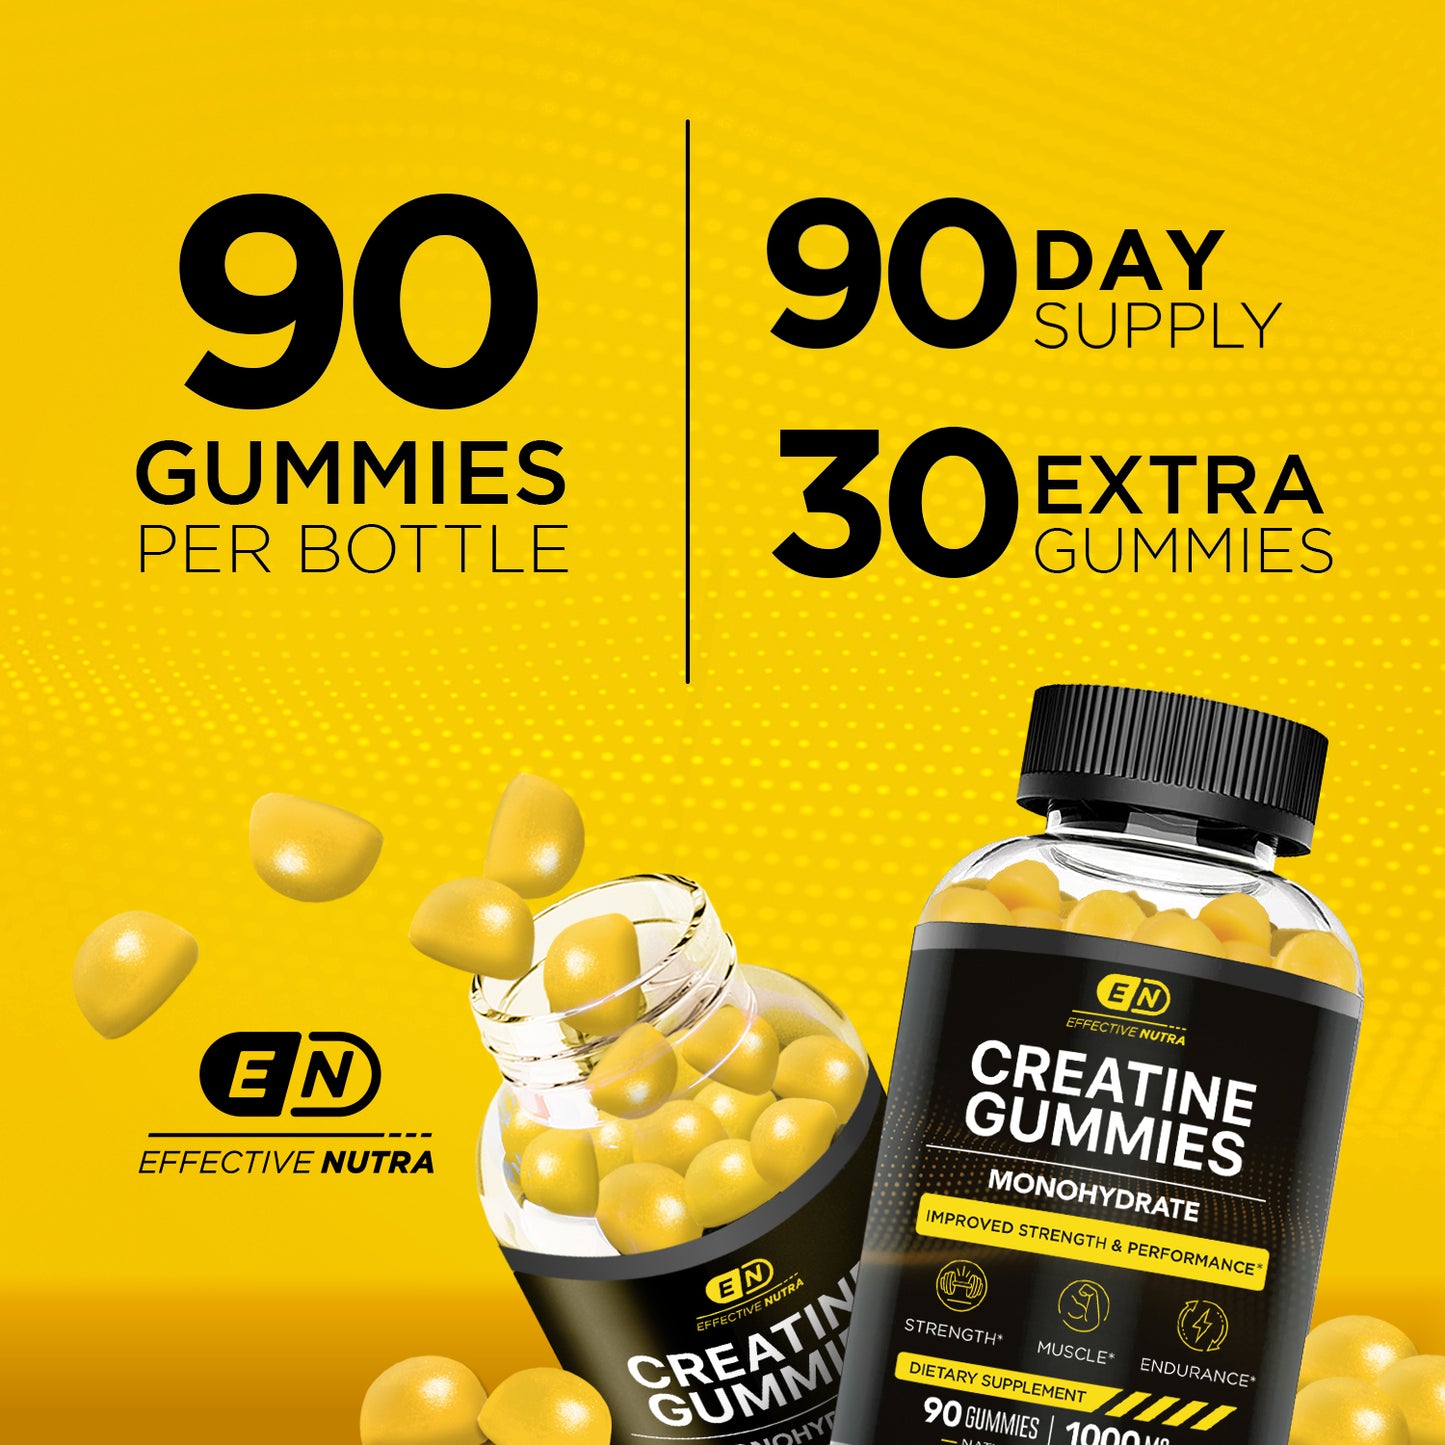 Creatine Gummies 1g (90 Count)